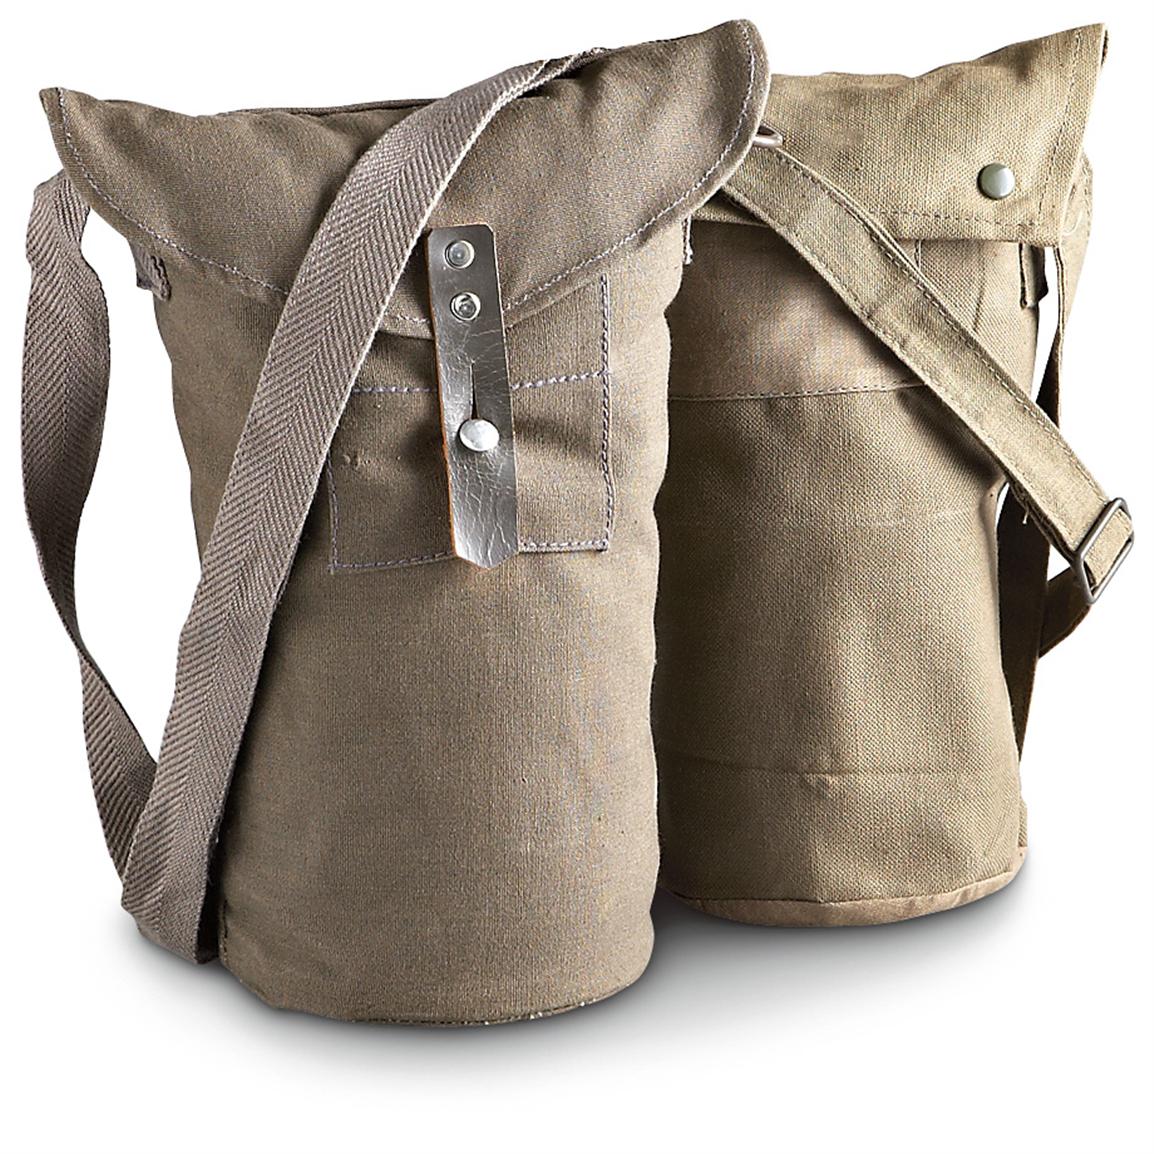 2 Used Swedish Military Surplus Shoulder Bags, Olive Drab / Gray